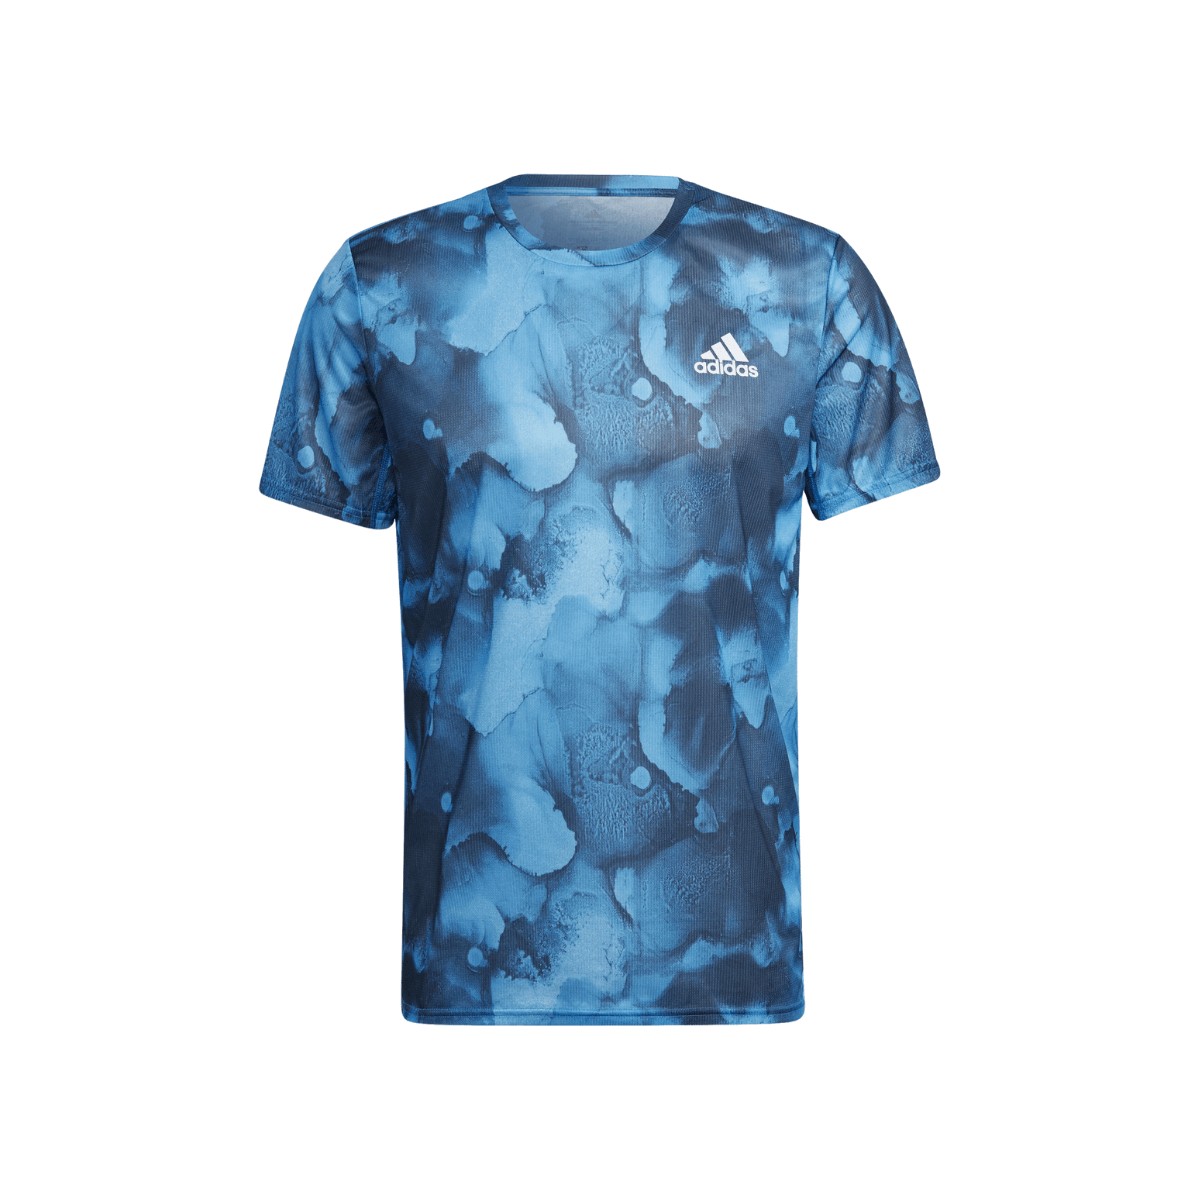 Camiseta Adidas Fast Graphic Blue Print, Tamanho S